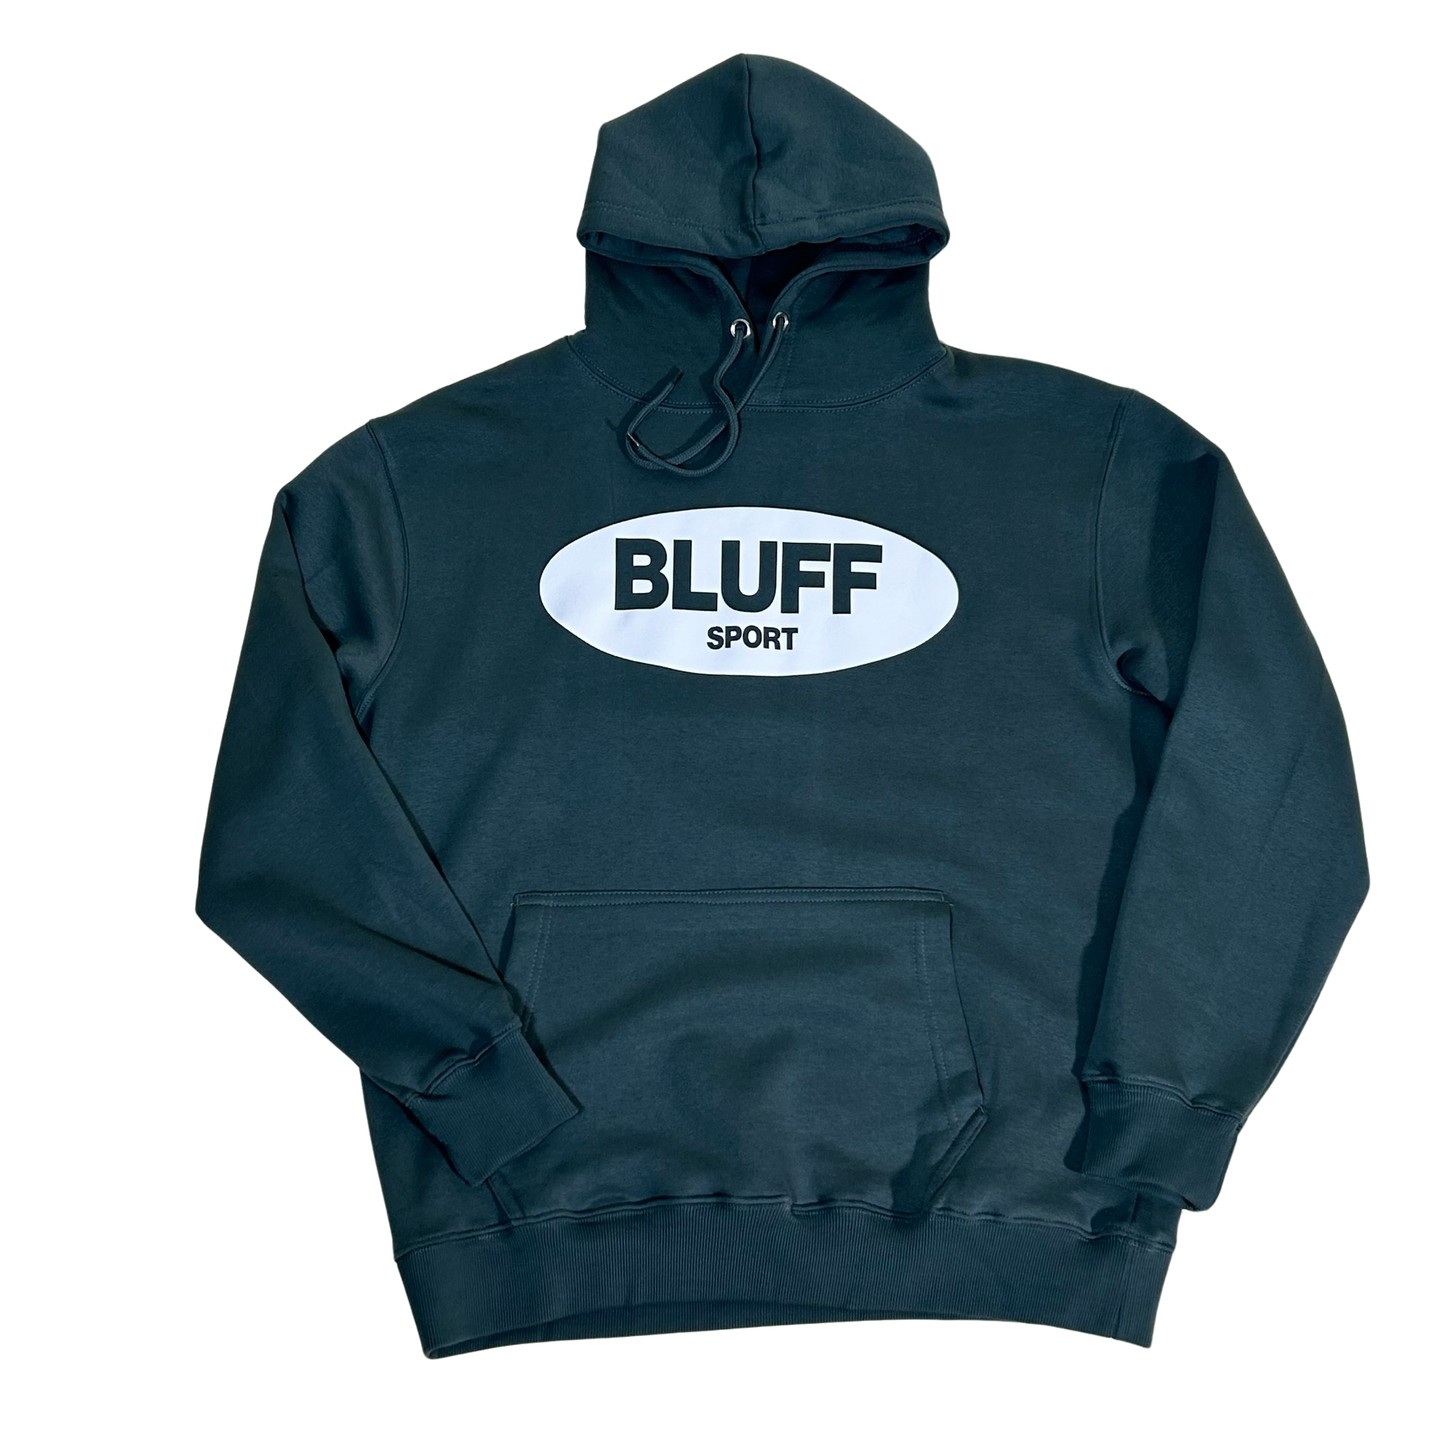 Bluff Sport Uniform Sweatsuit